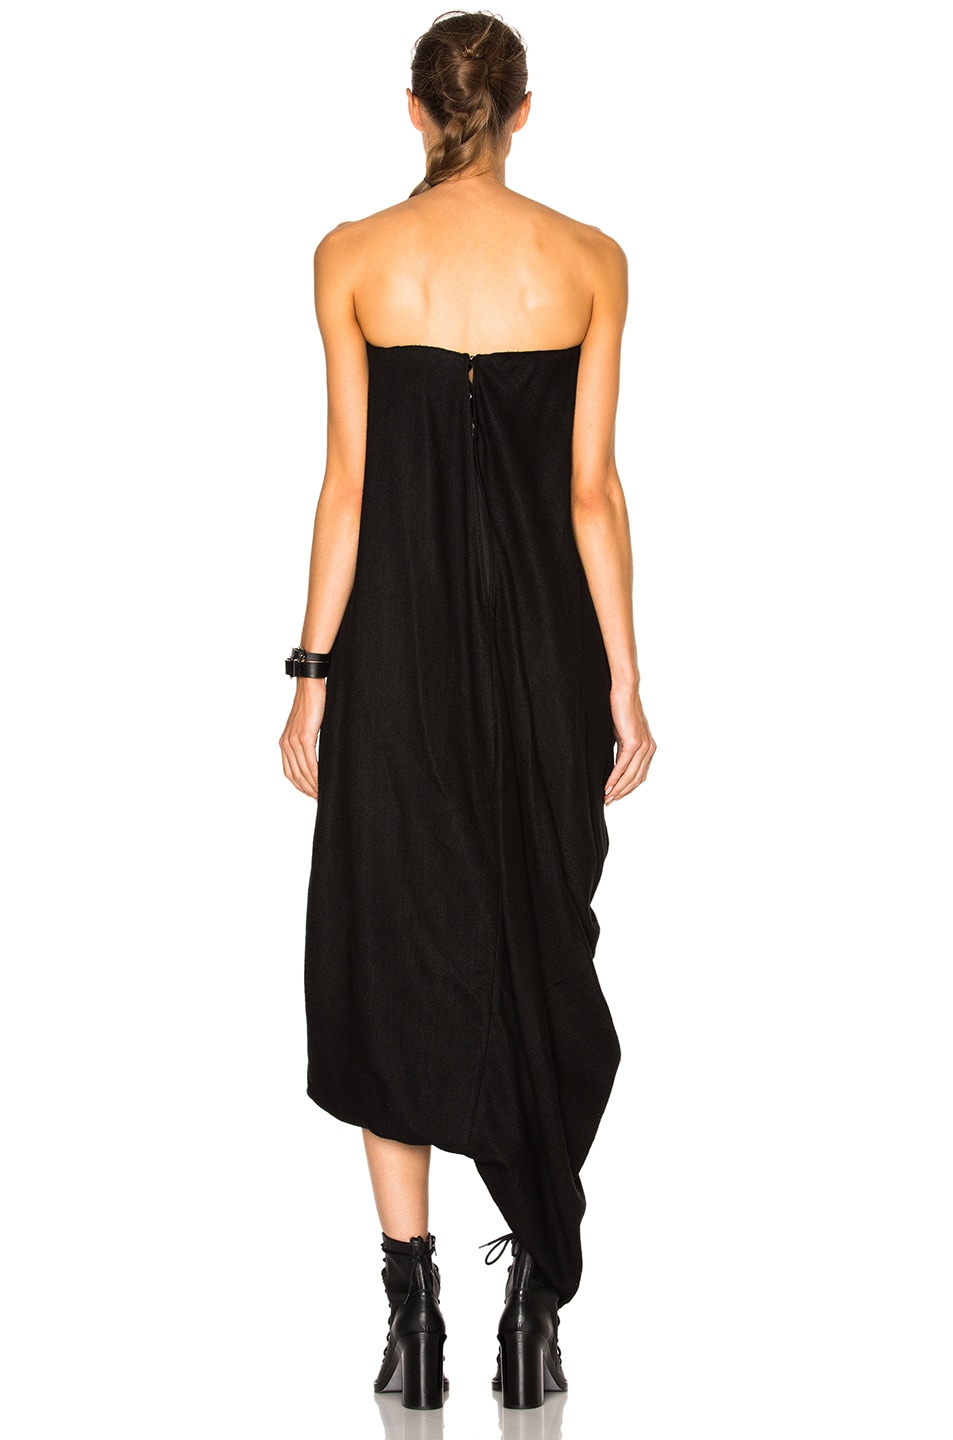 RICK OWENS Strapless Asymmetric Dress, Black | ModeSens